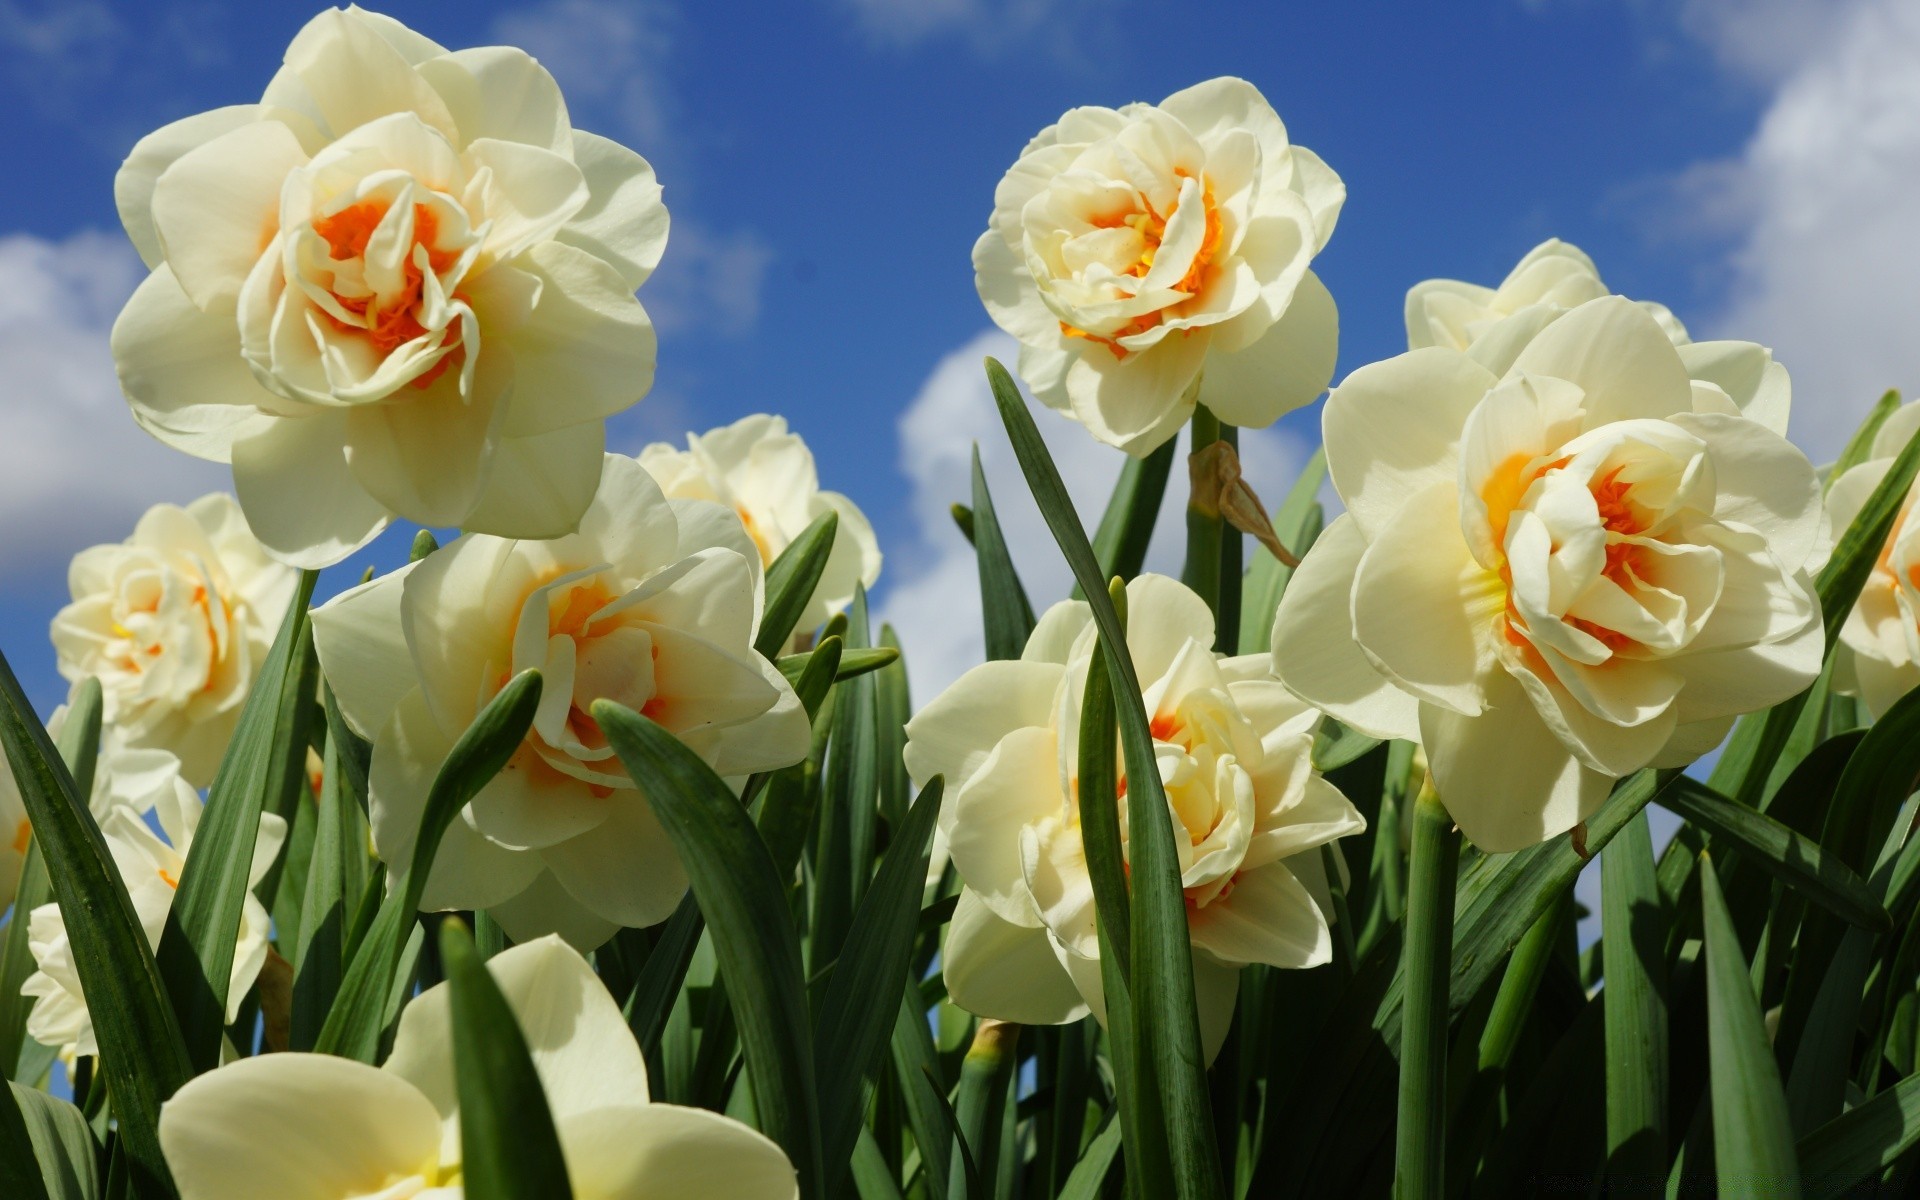 весна цветок природа флора букет цветочные пасха лепесток тюльпан блюминг лист кластер романтика сад подарок любовь лузга цвет яркий лето